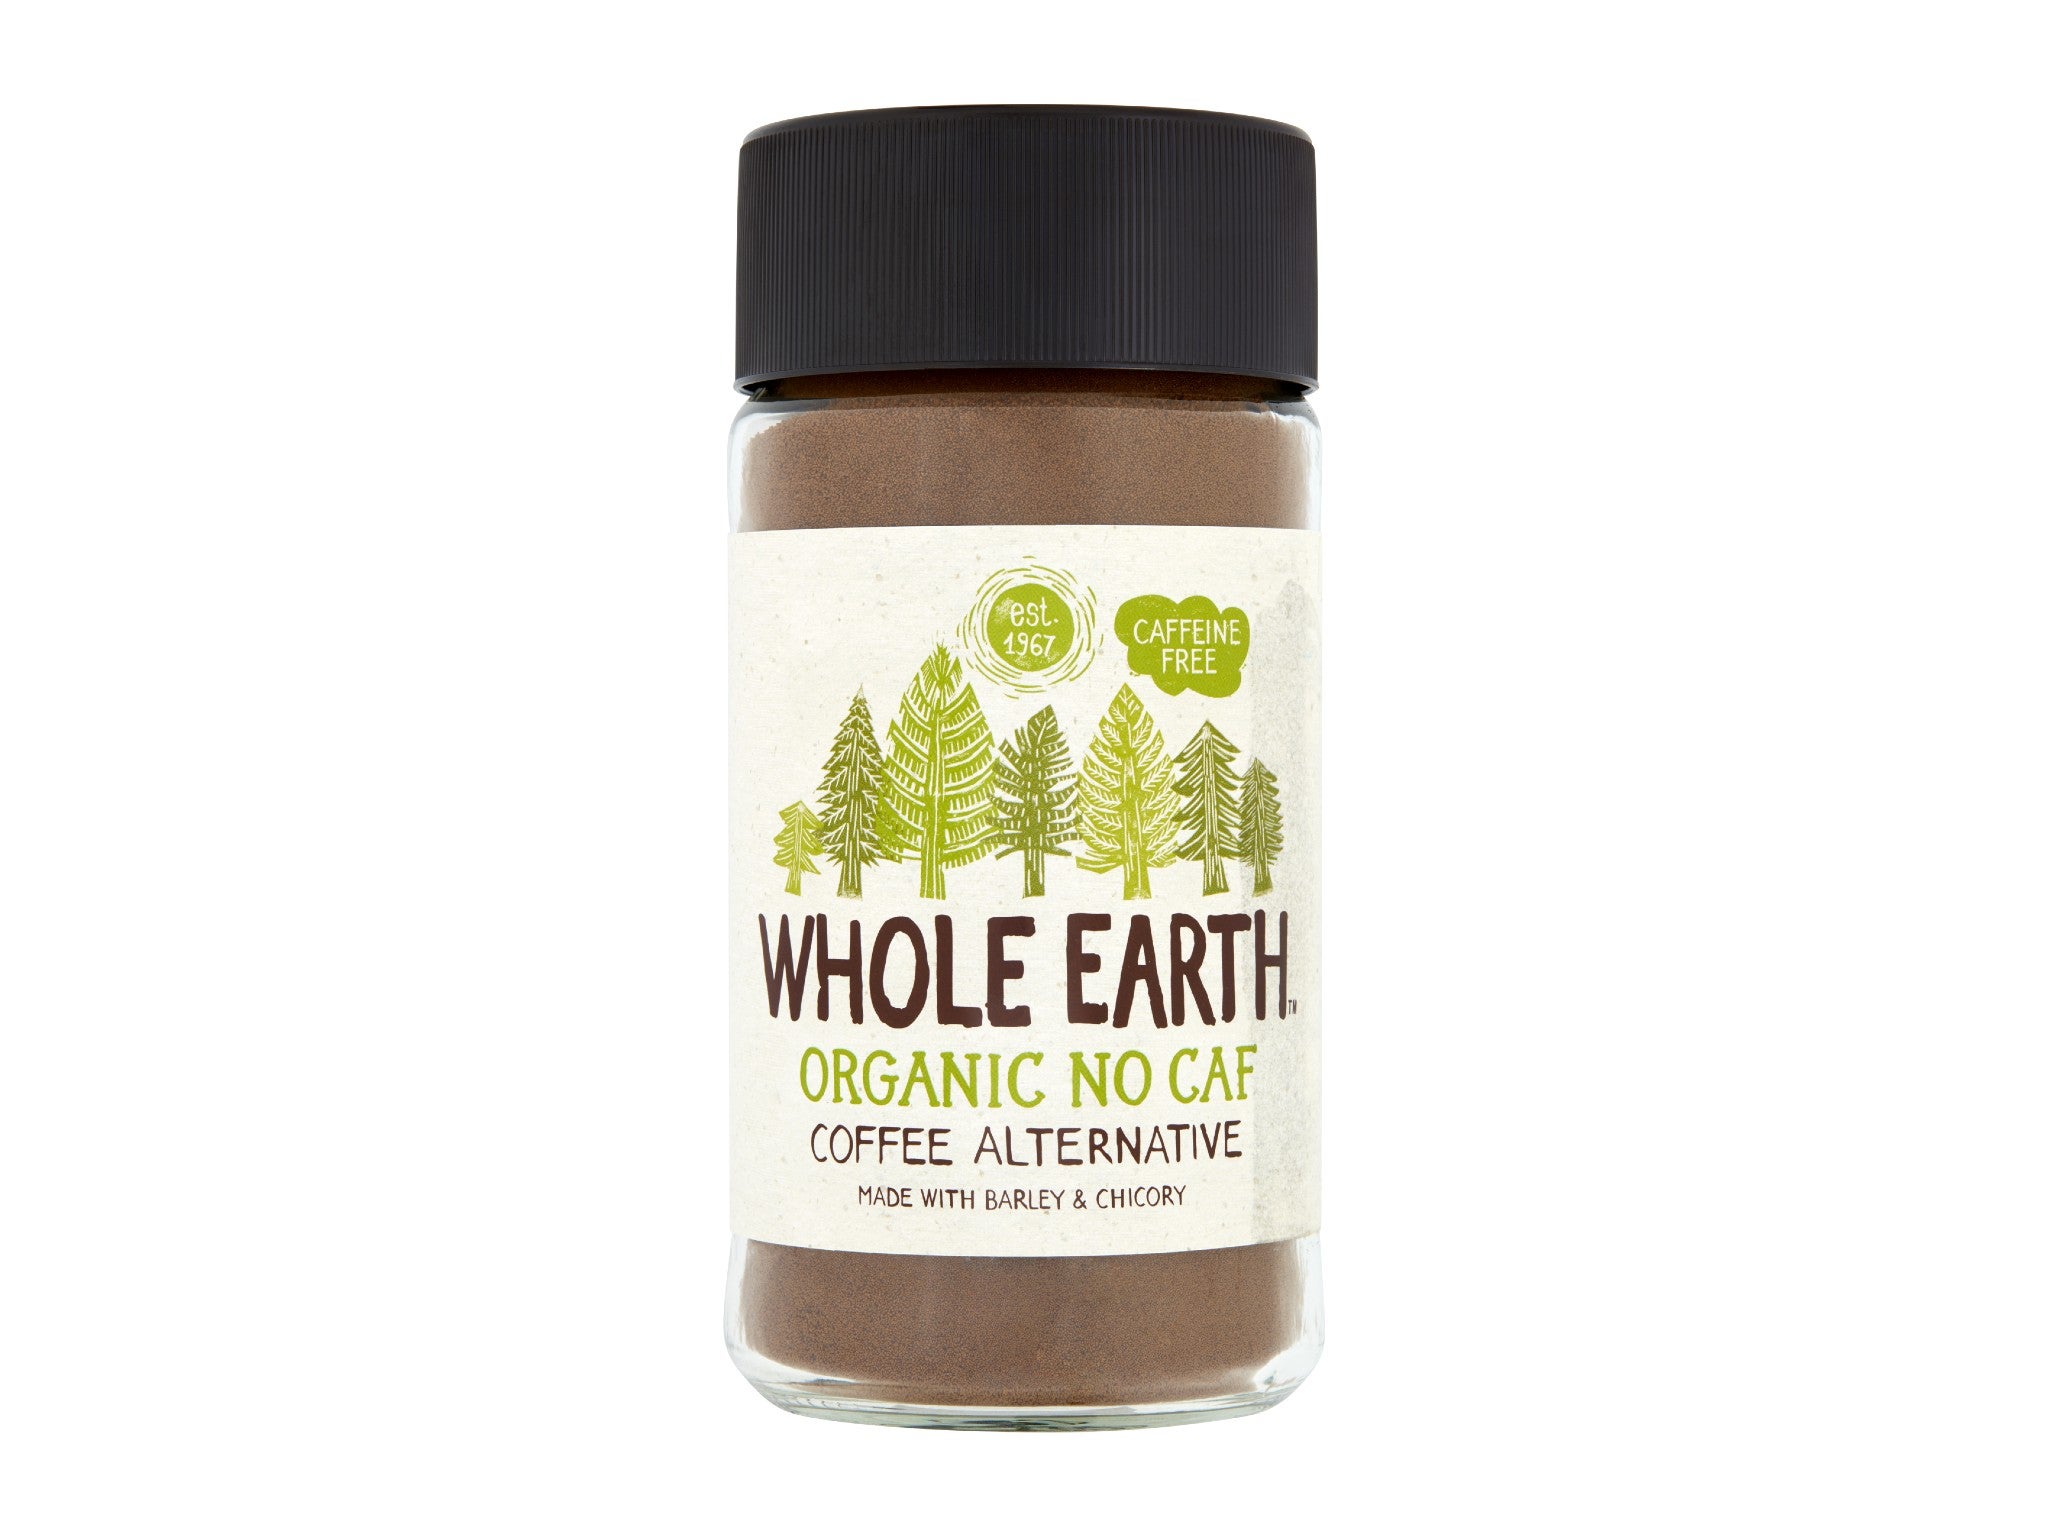 Whole Earth organic no caffeine coffee alternative indybest.jpeg